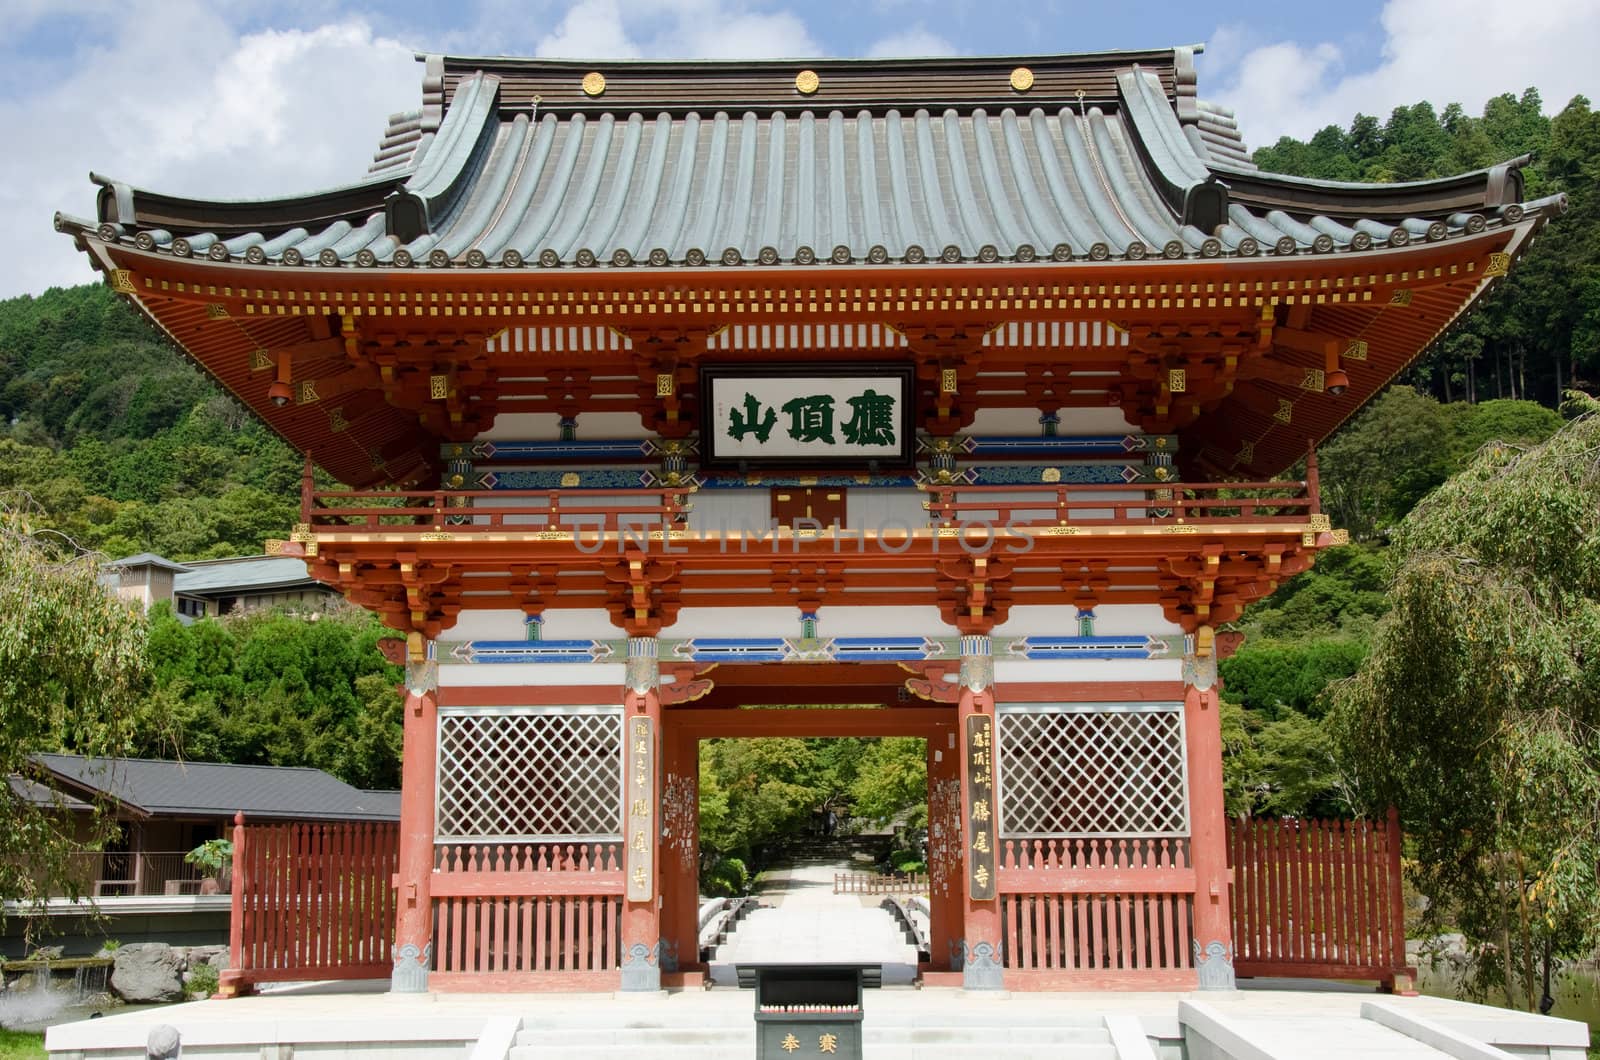 Main gate of the Katsuo Ji temple, buddhist temple of the winner's luck in Mino, Japan